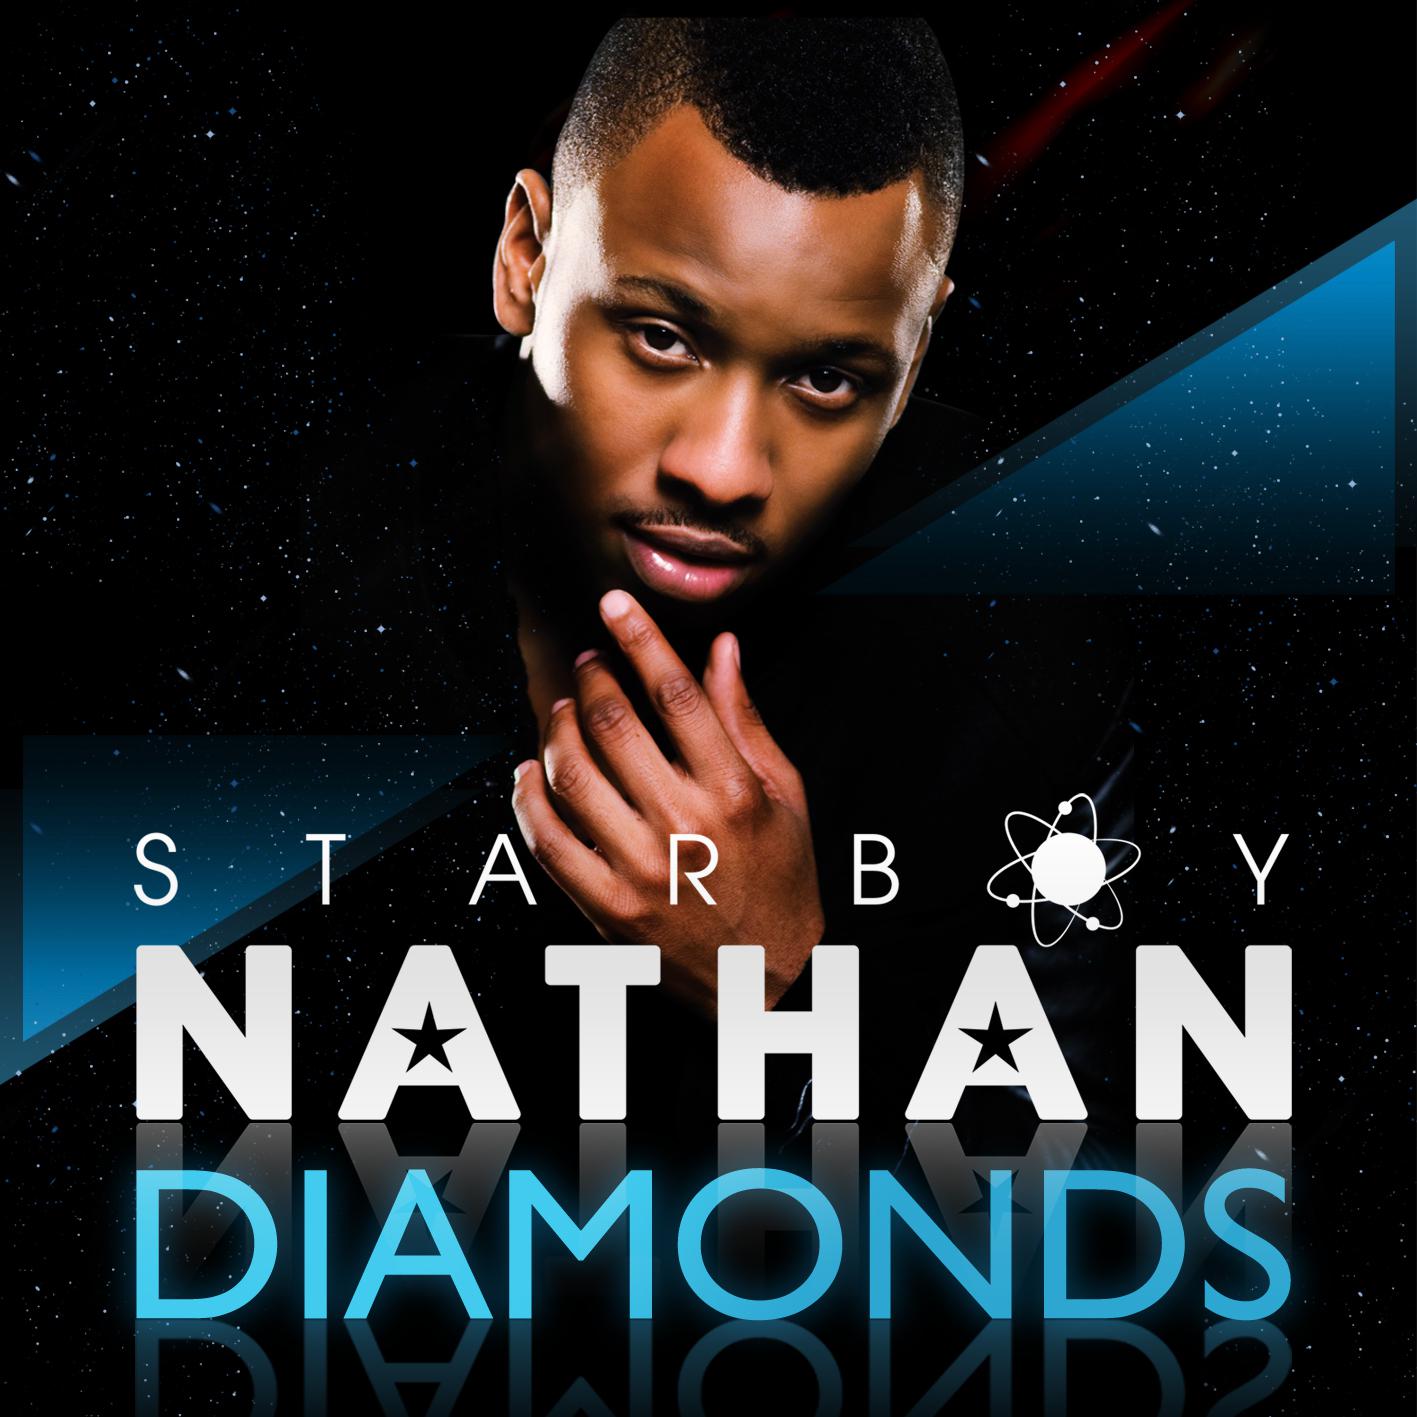 Starboy Nathan - Diamonds [Radio Edit]